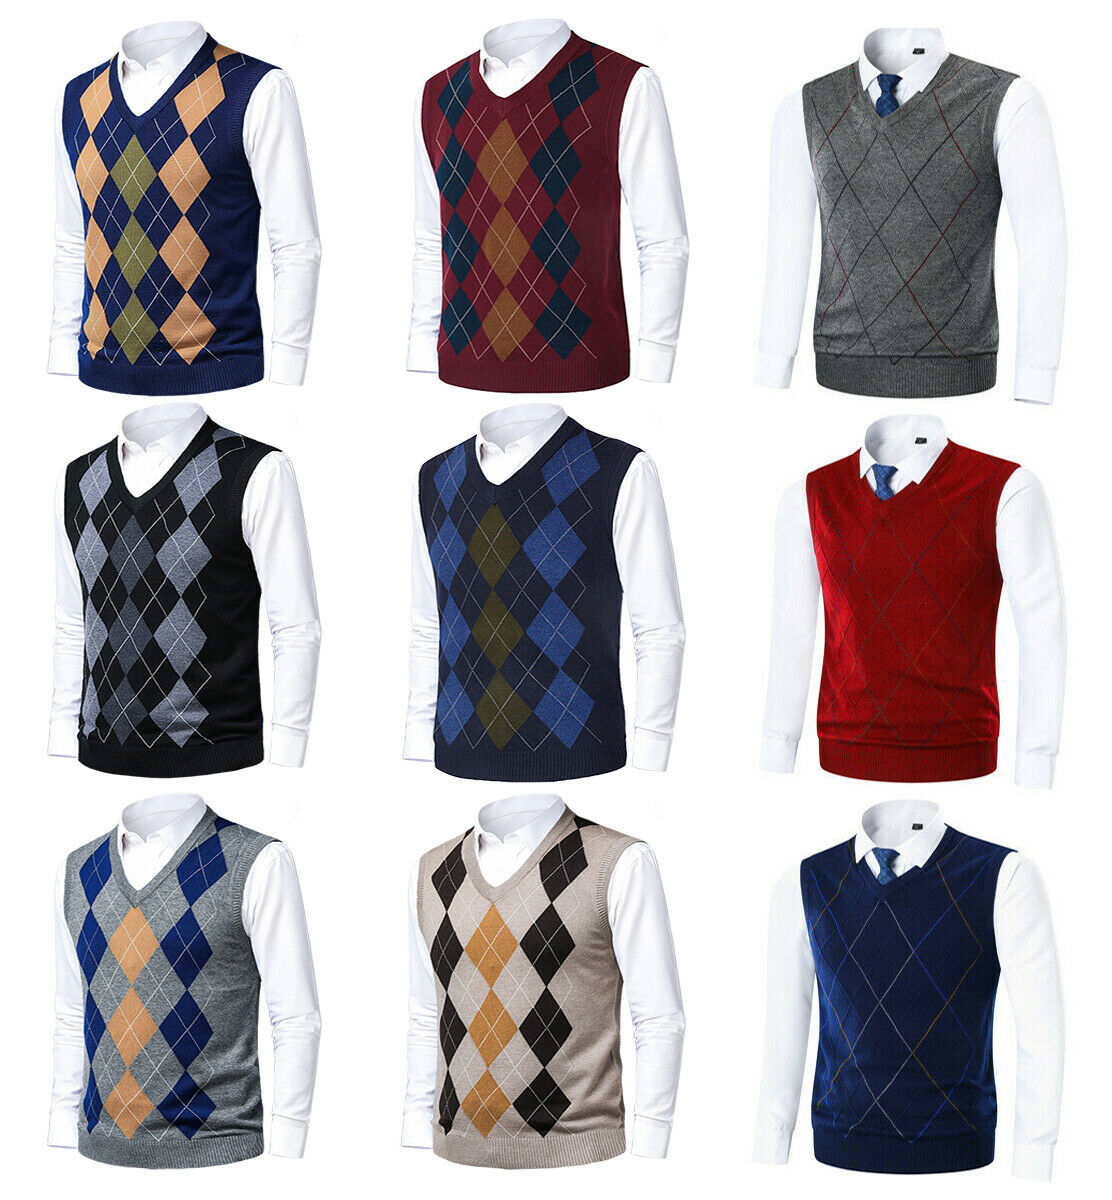 Mens Argyle Sweater Vest Golf Knitted Tank Top V-neck Sleeveless Pullover